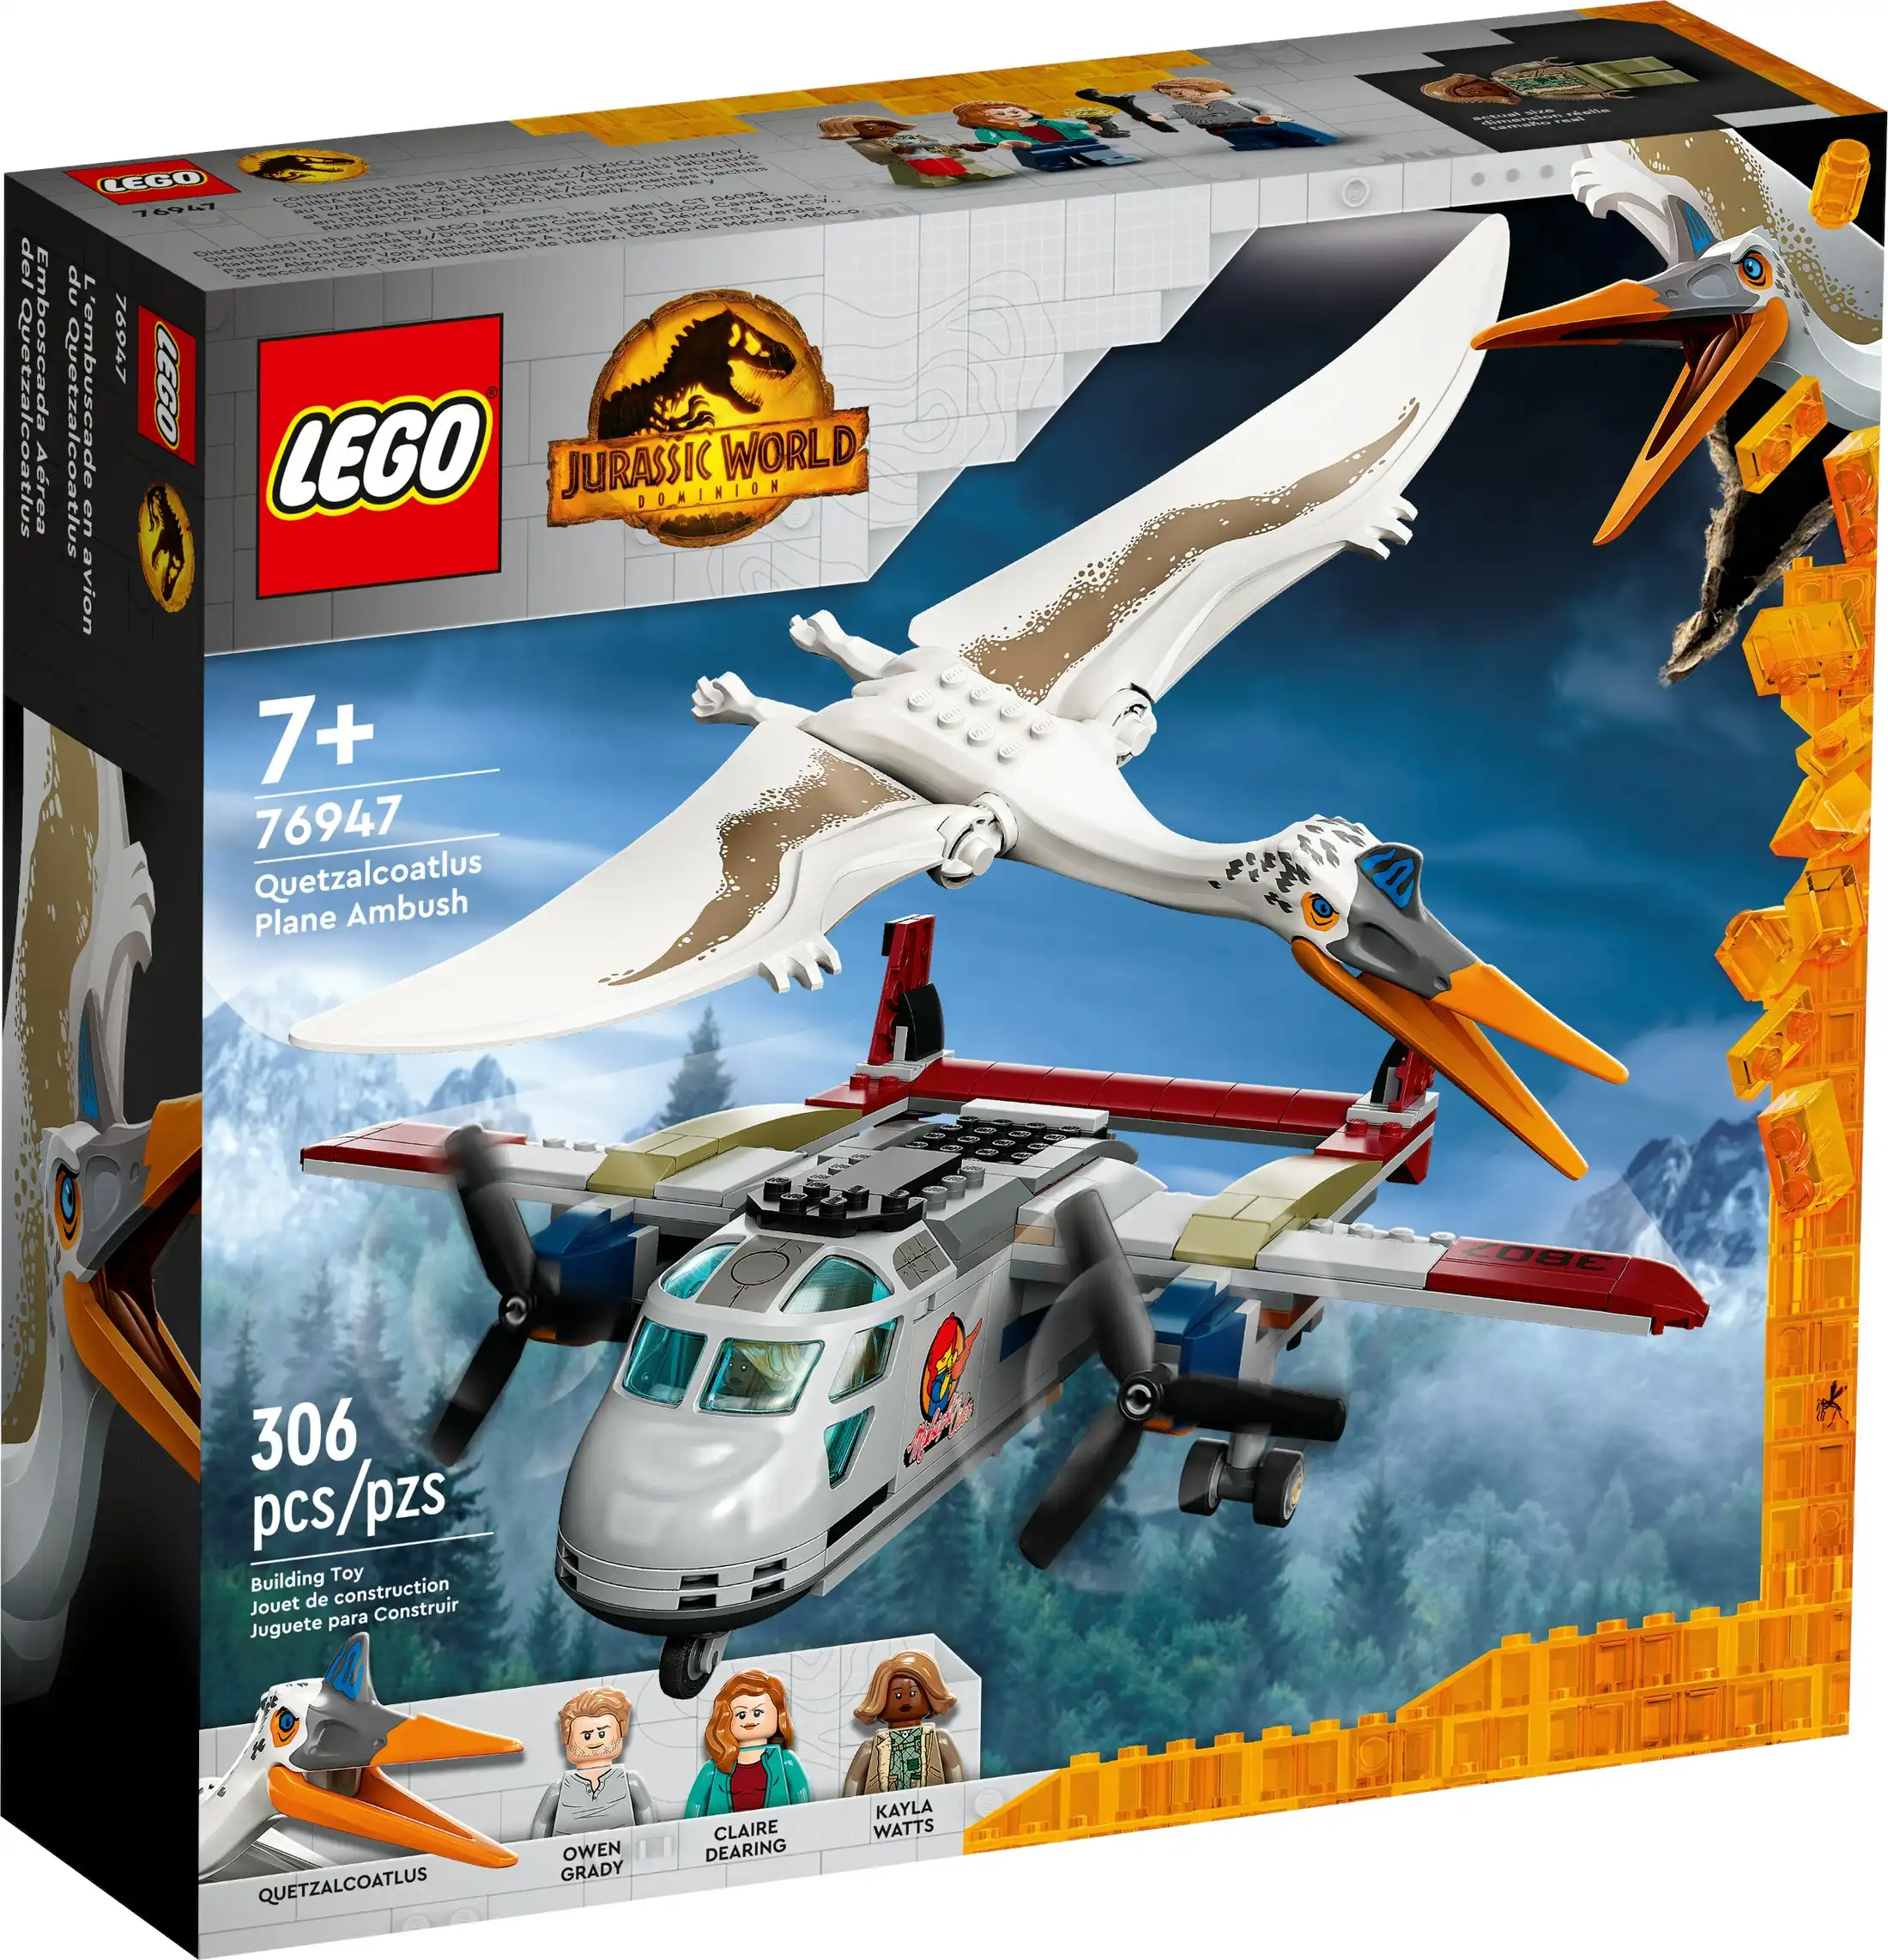 LEGO 76947 Quetzalcoatlus Plane Ambush - Jurassic World